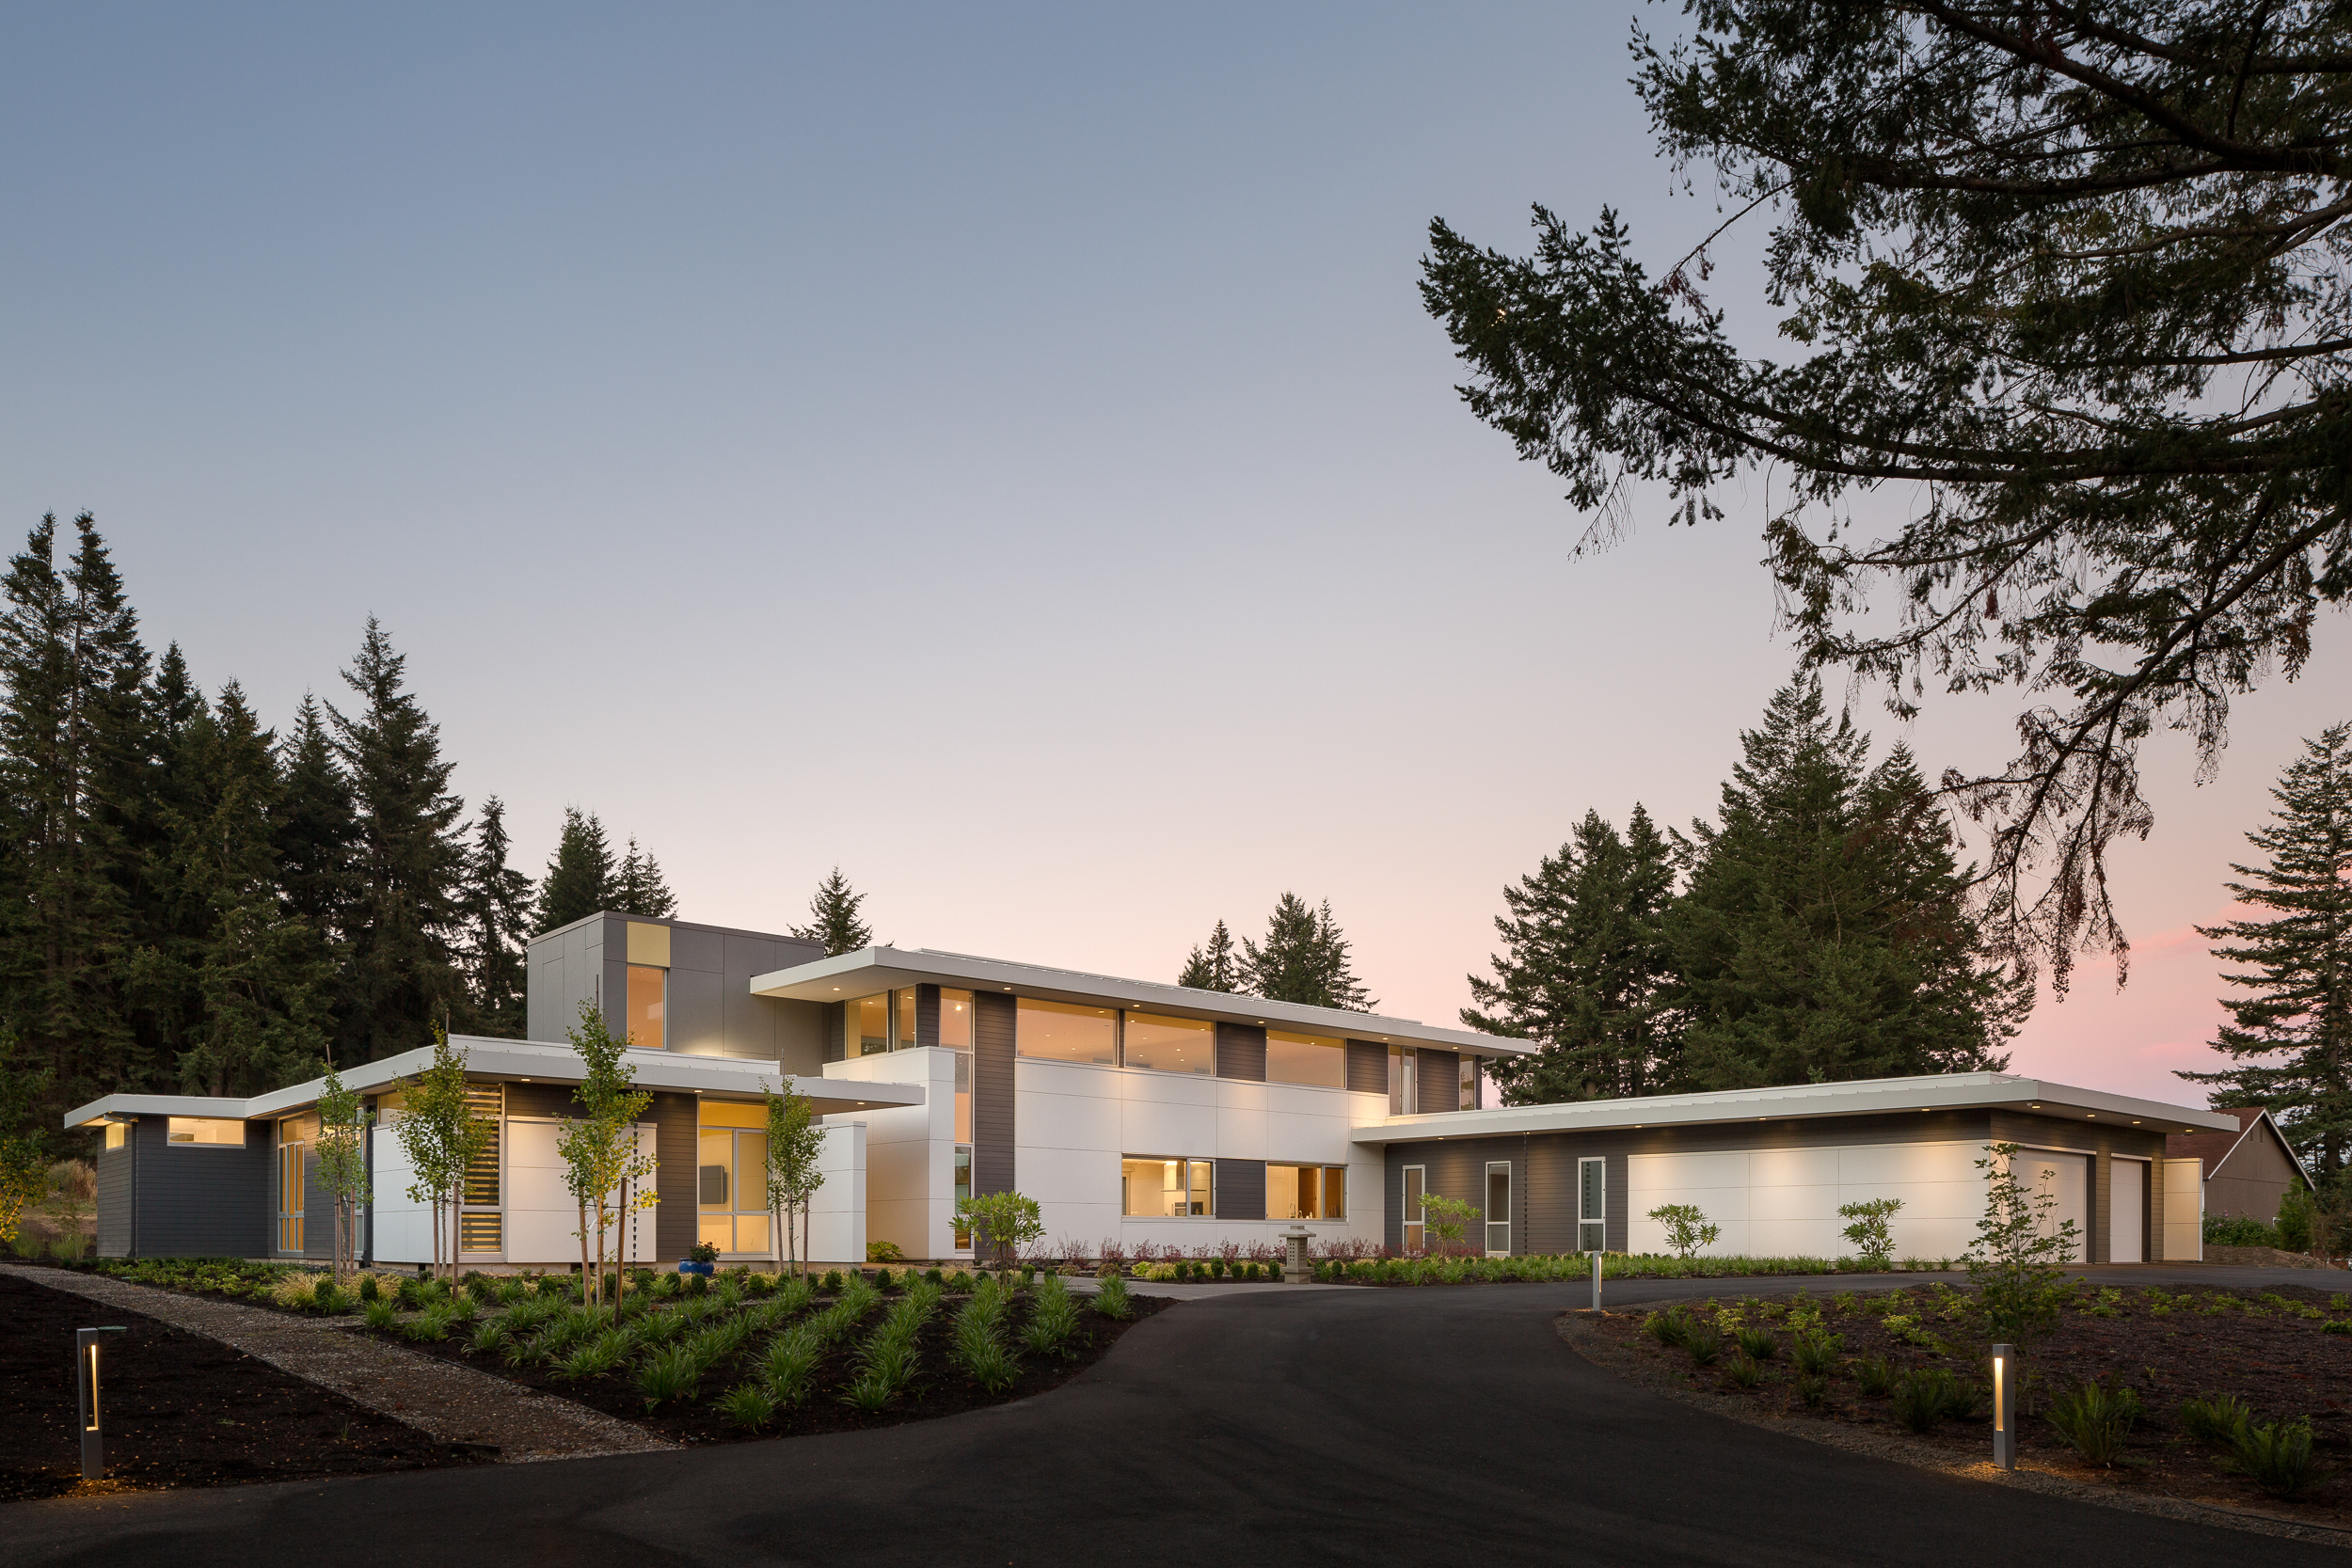  Orchard House / Steelhead Architecture 